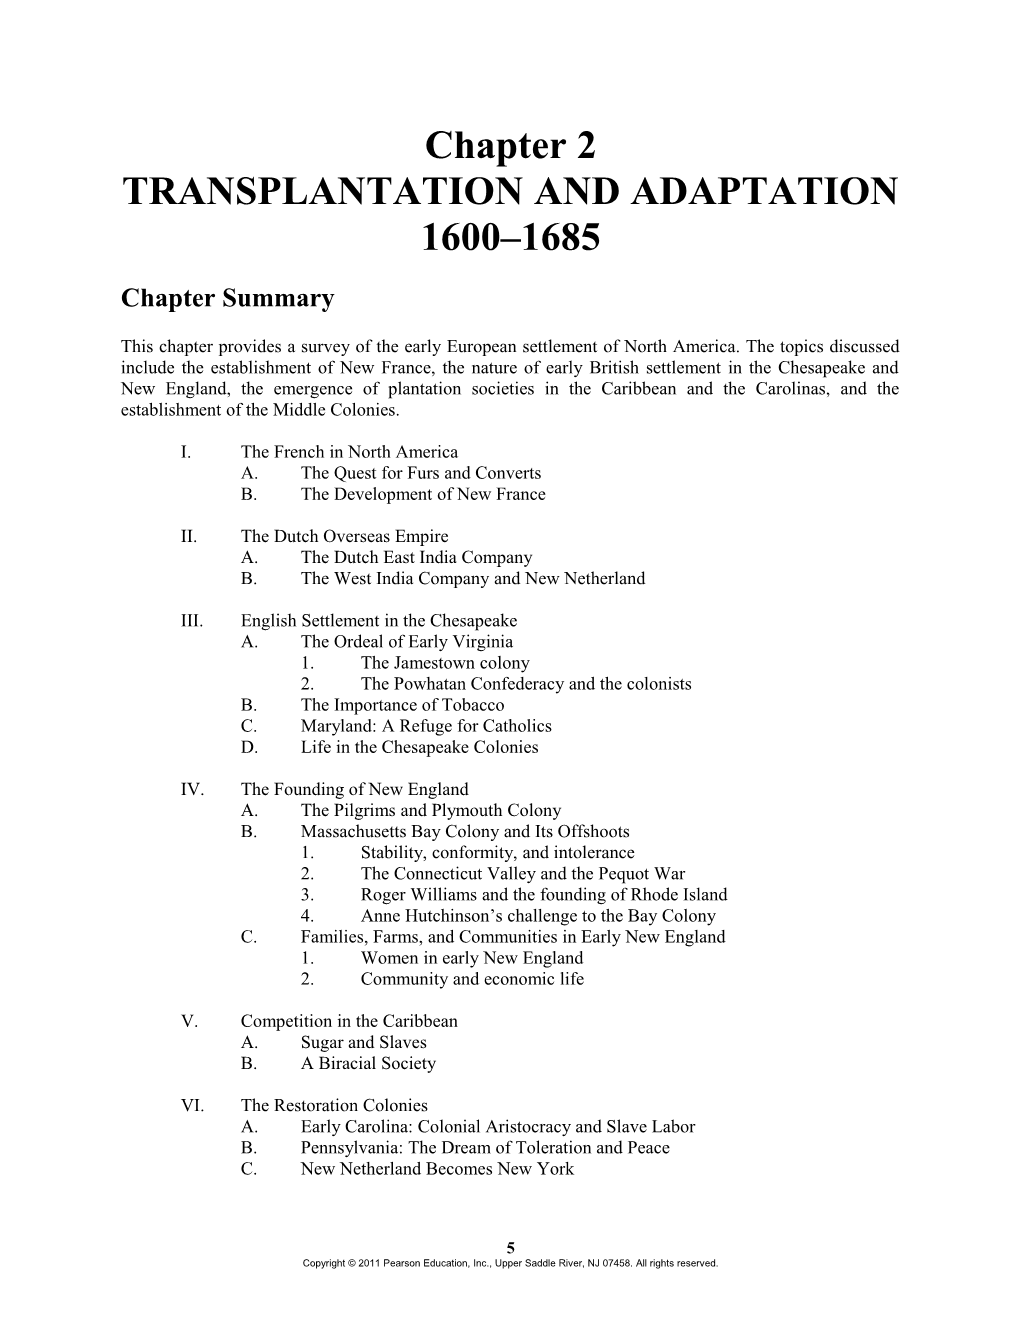 Transplantation and Adaptation 1600 1685